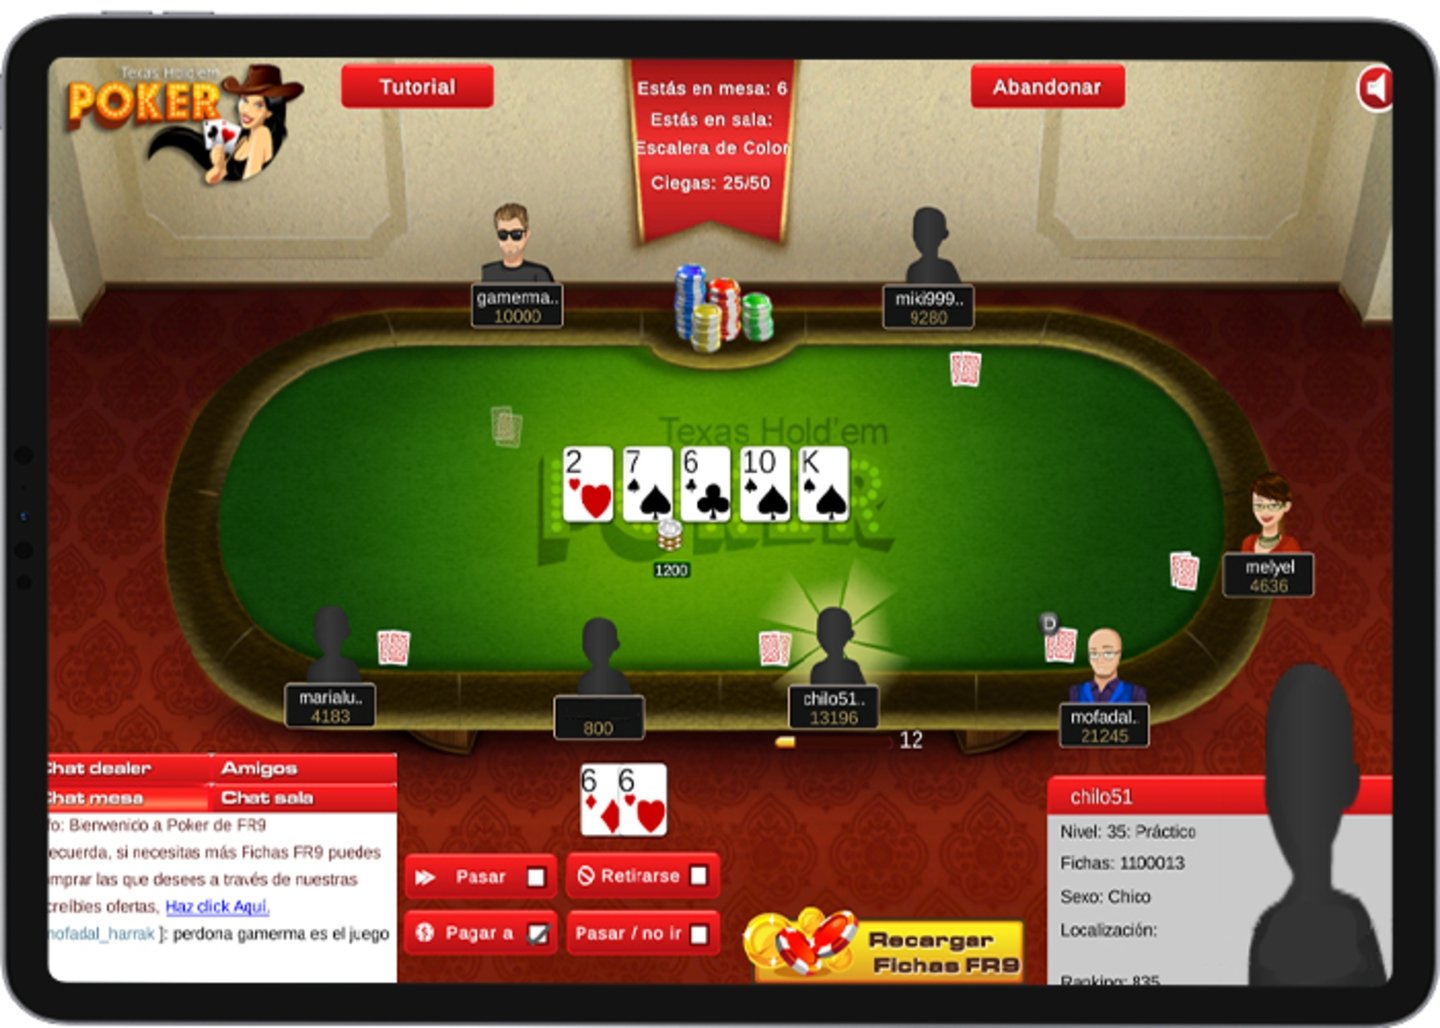 Poker en linea- Fr9.es te invita al desafio